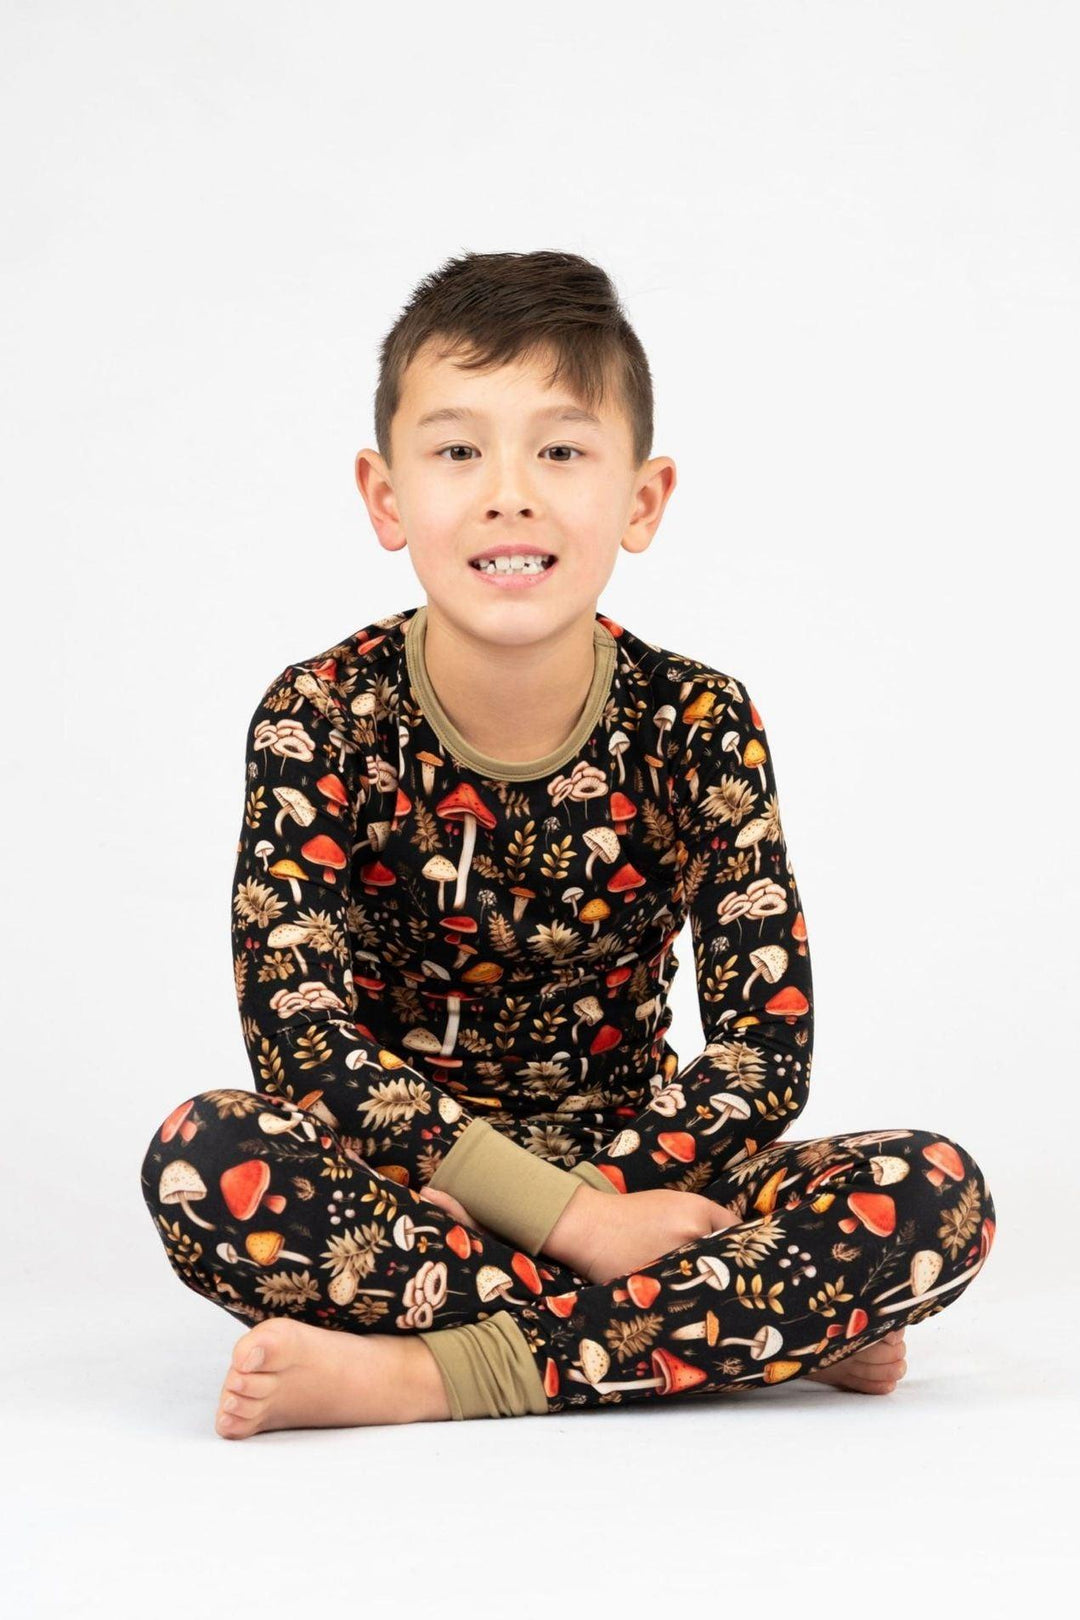 Toadstool Tales: Kids' Two-Piece Mushroom Bamboo Pajamas - Unisex - Sophia Rose Children's Boutique